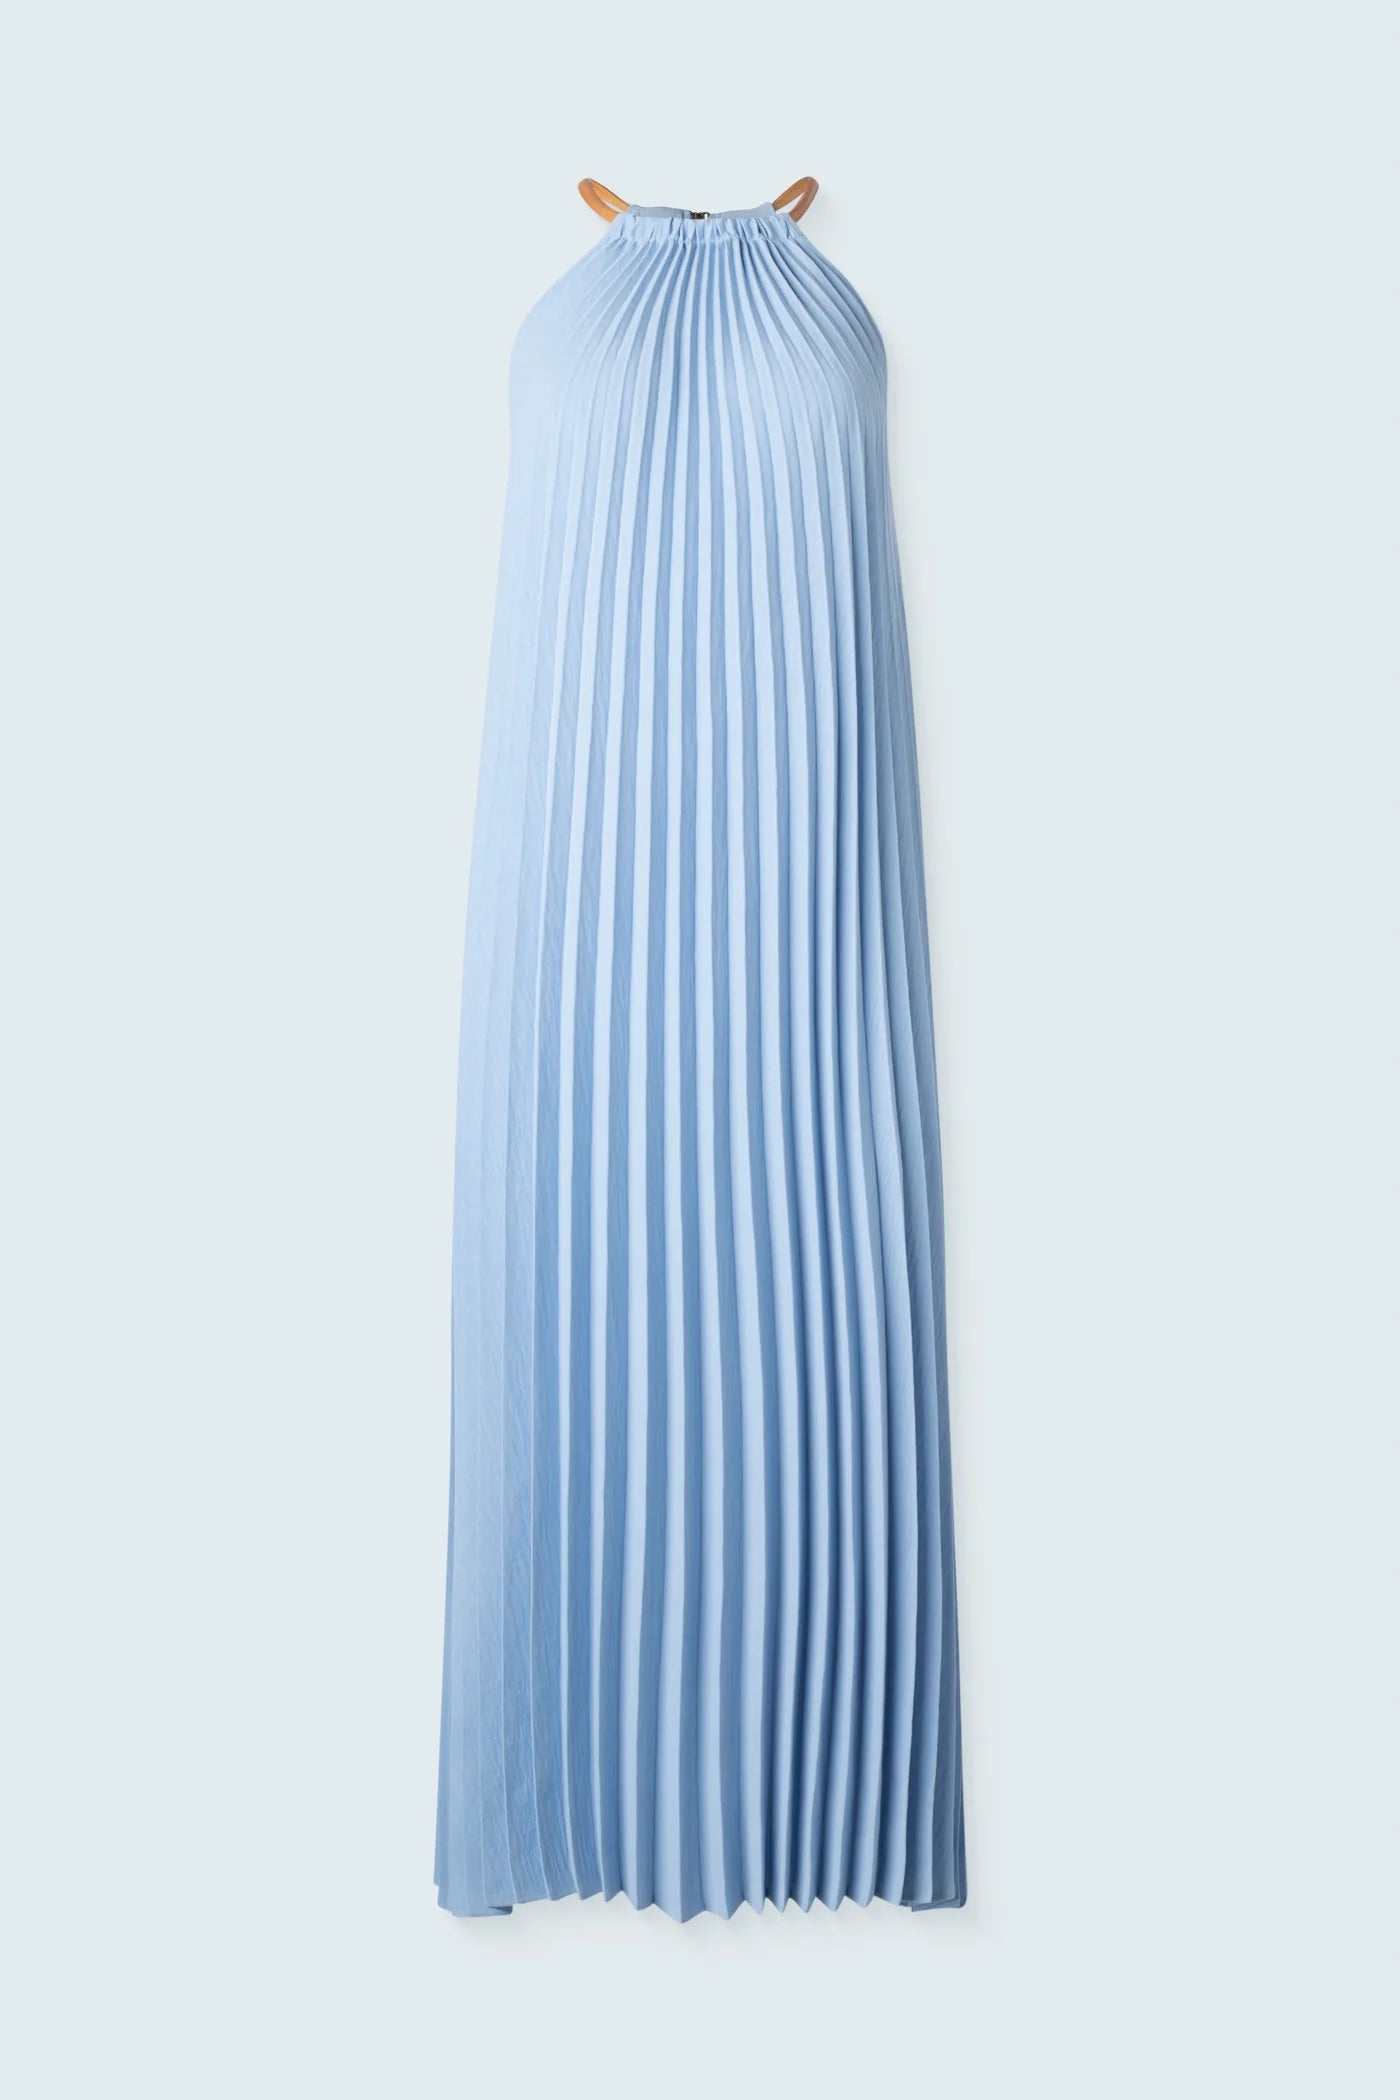 Halter Top Long Pleated Dress in Light Blue